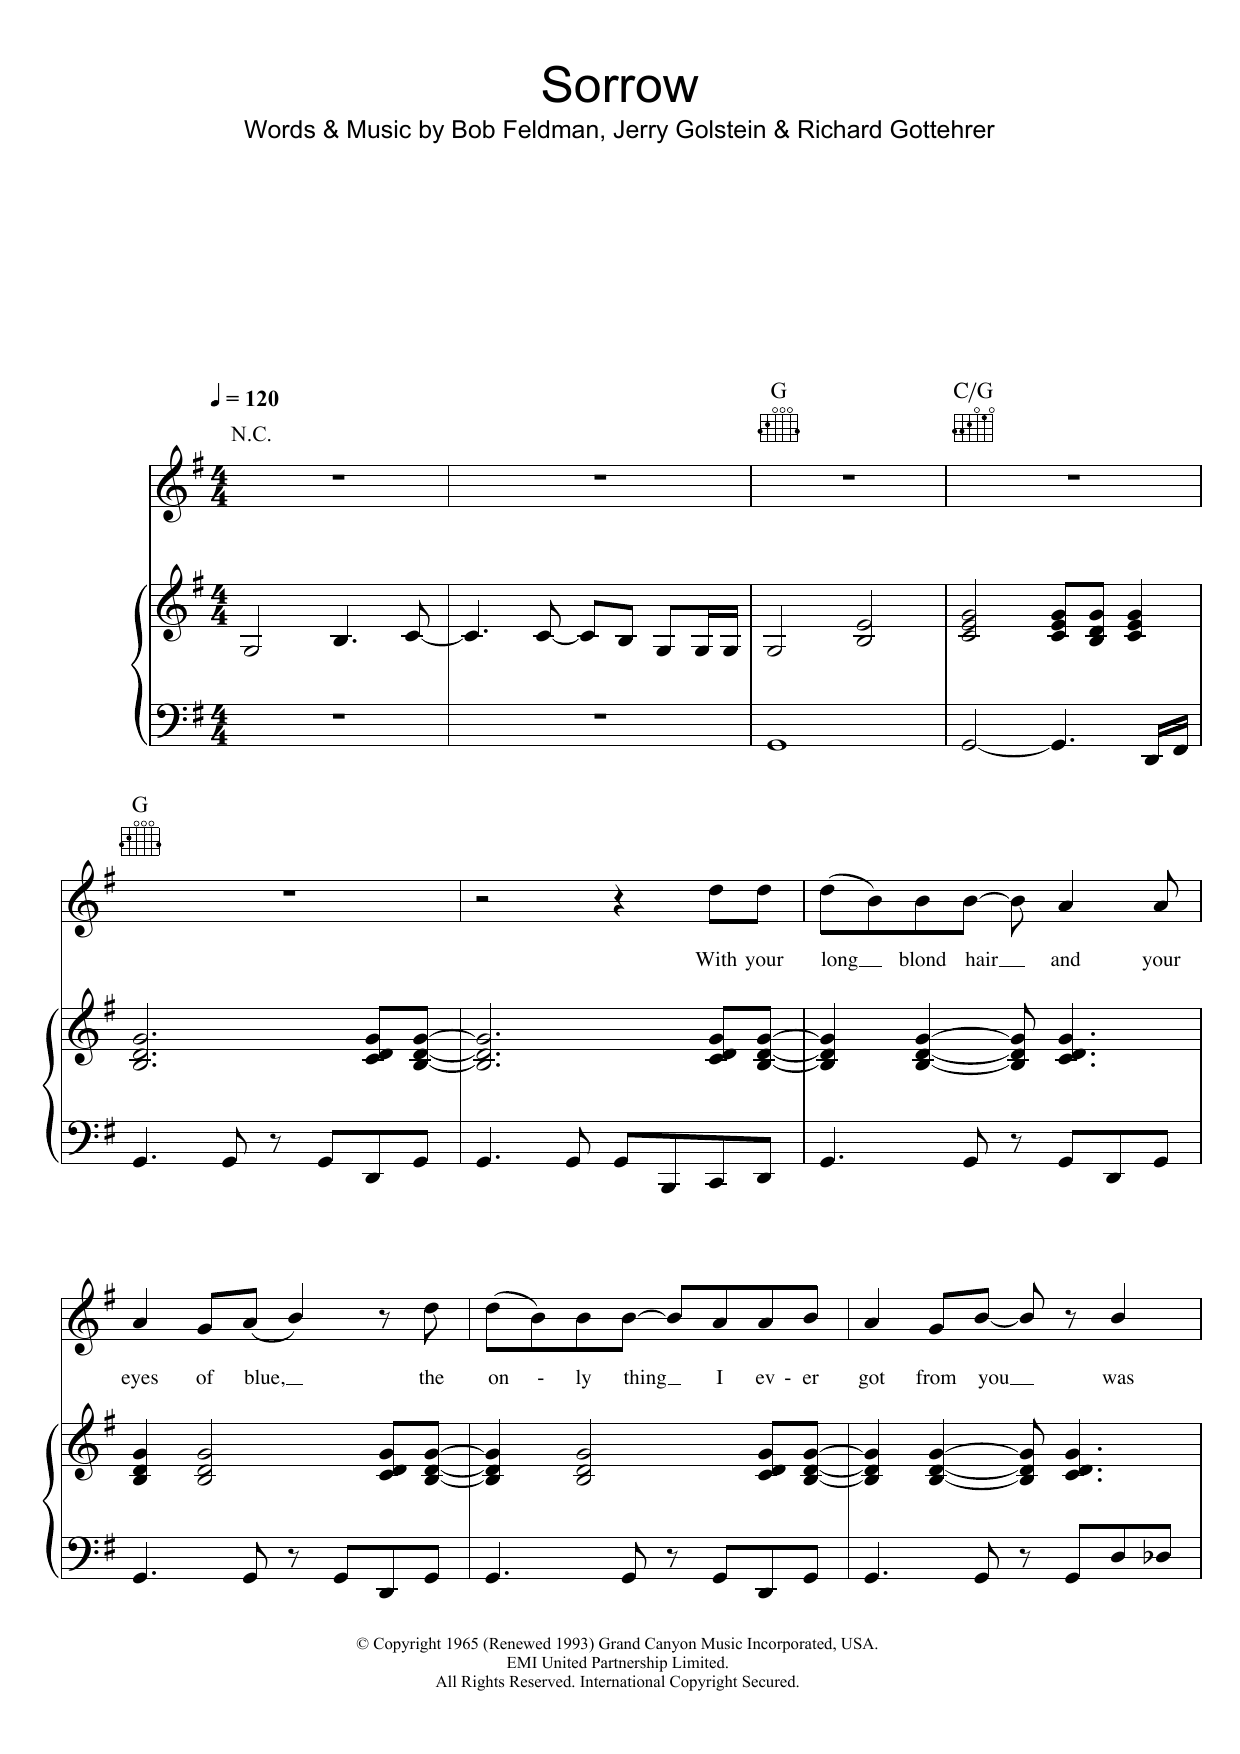 David Bowie Sorrow sheet music notes printable PDF score